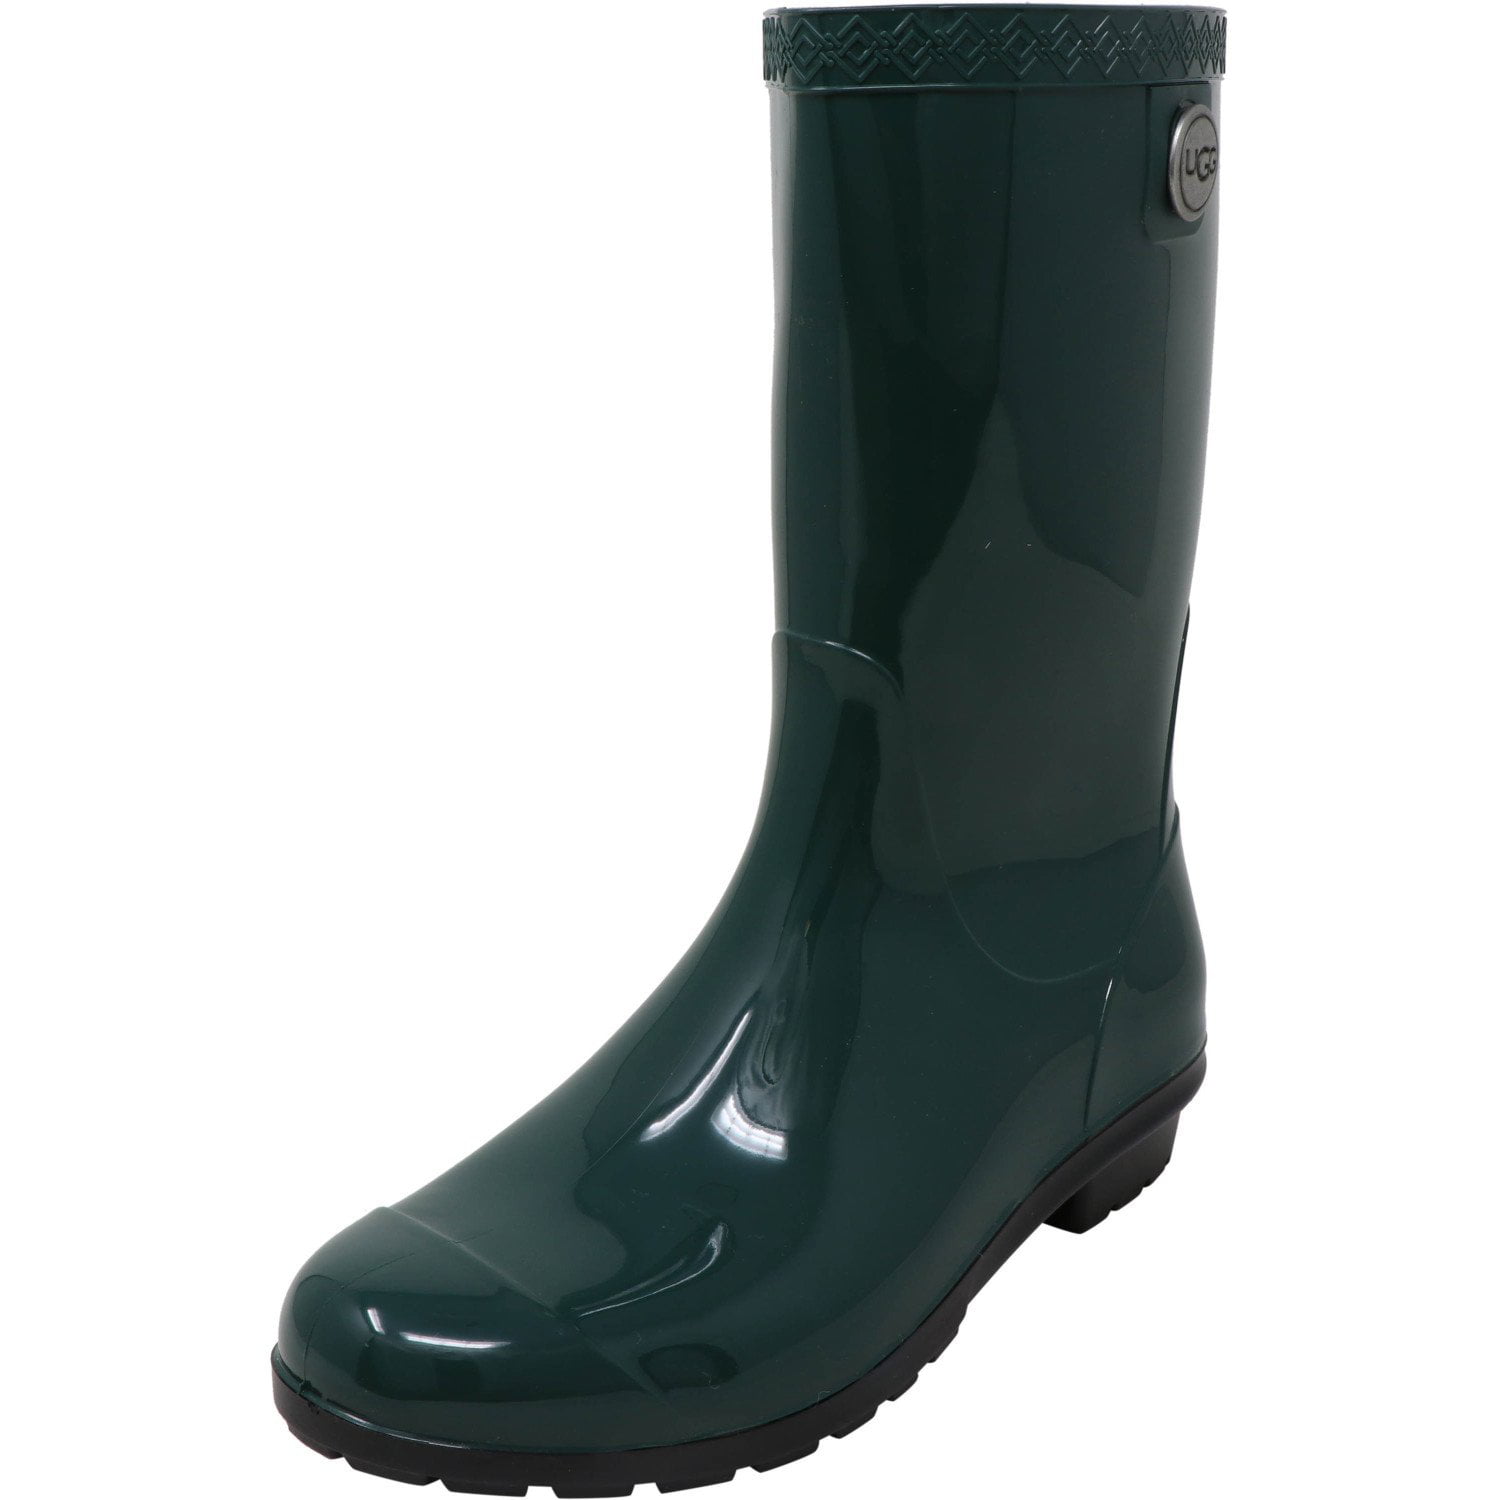 Ugg Women's Sienna Pine Mid-Calf Rain Boot - 6M - Walmart.com